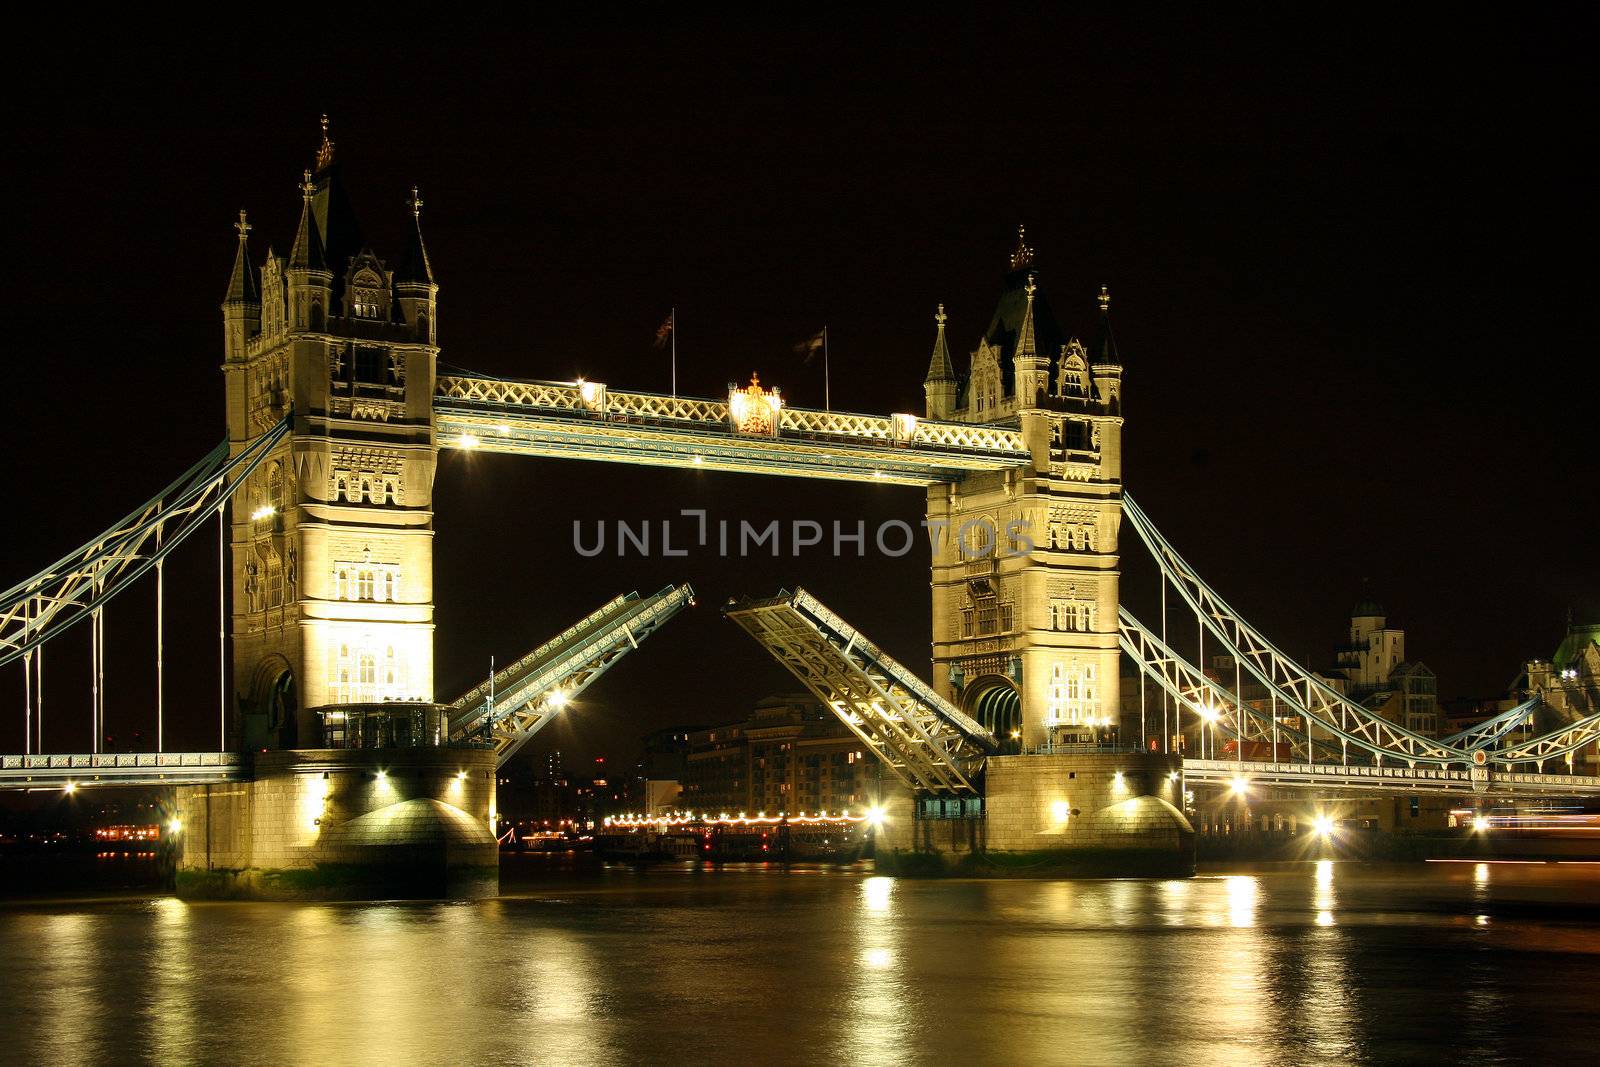 Tower Bridge Open  London  U.K.
Low Light Photography  (LLP)